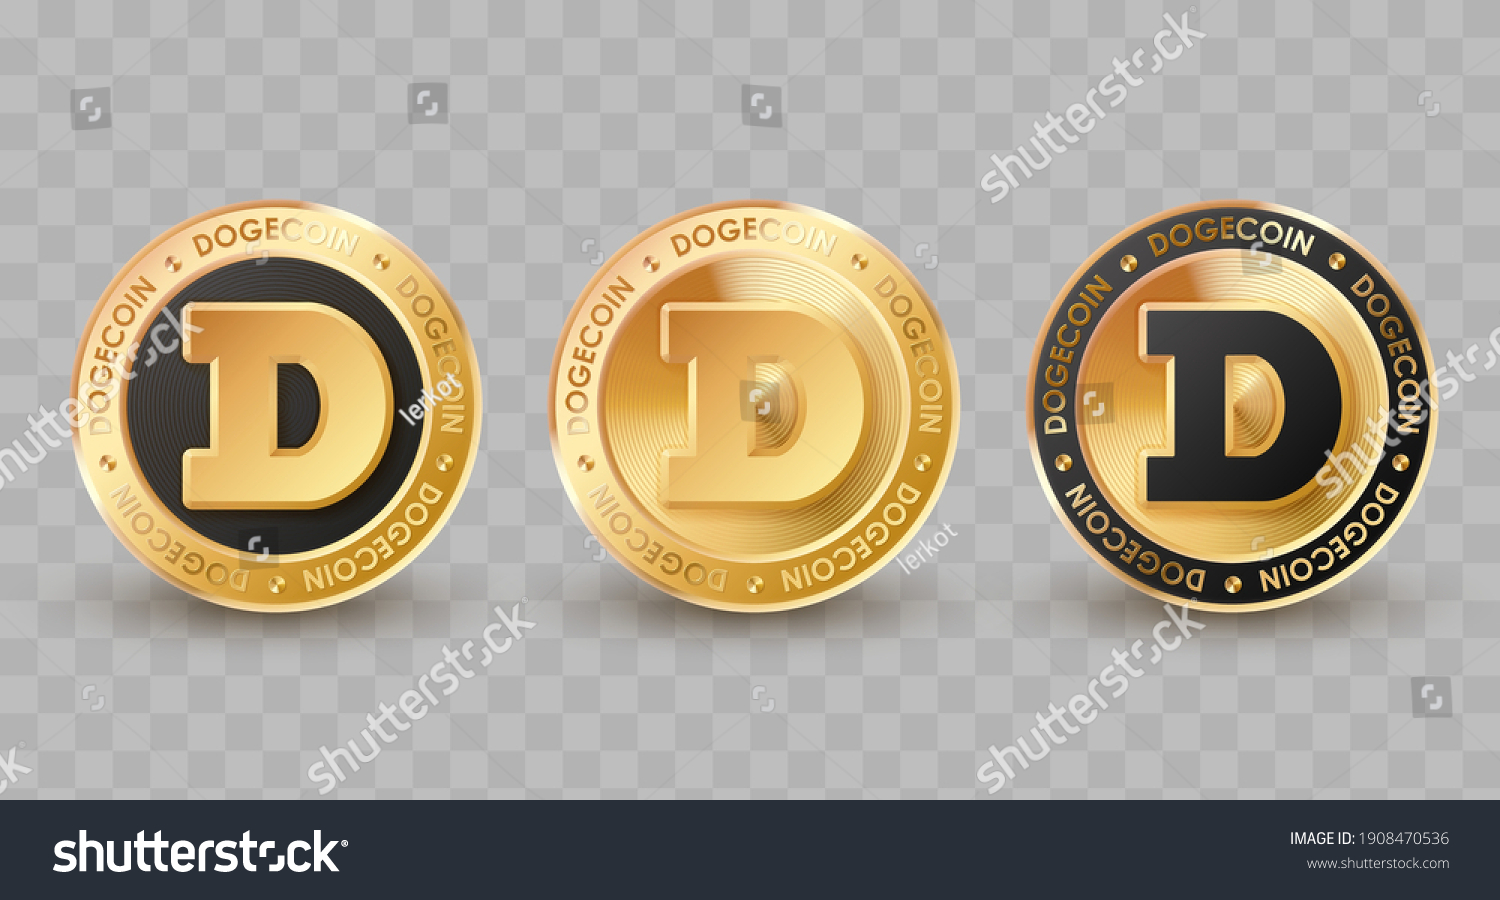 SVG of Set of concept different gold, golden, black coins, dogecoin, crypto currency on transparent background. Vector illustration for card, party, design, flyer, poster, decor, banner, web, advertising. svg